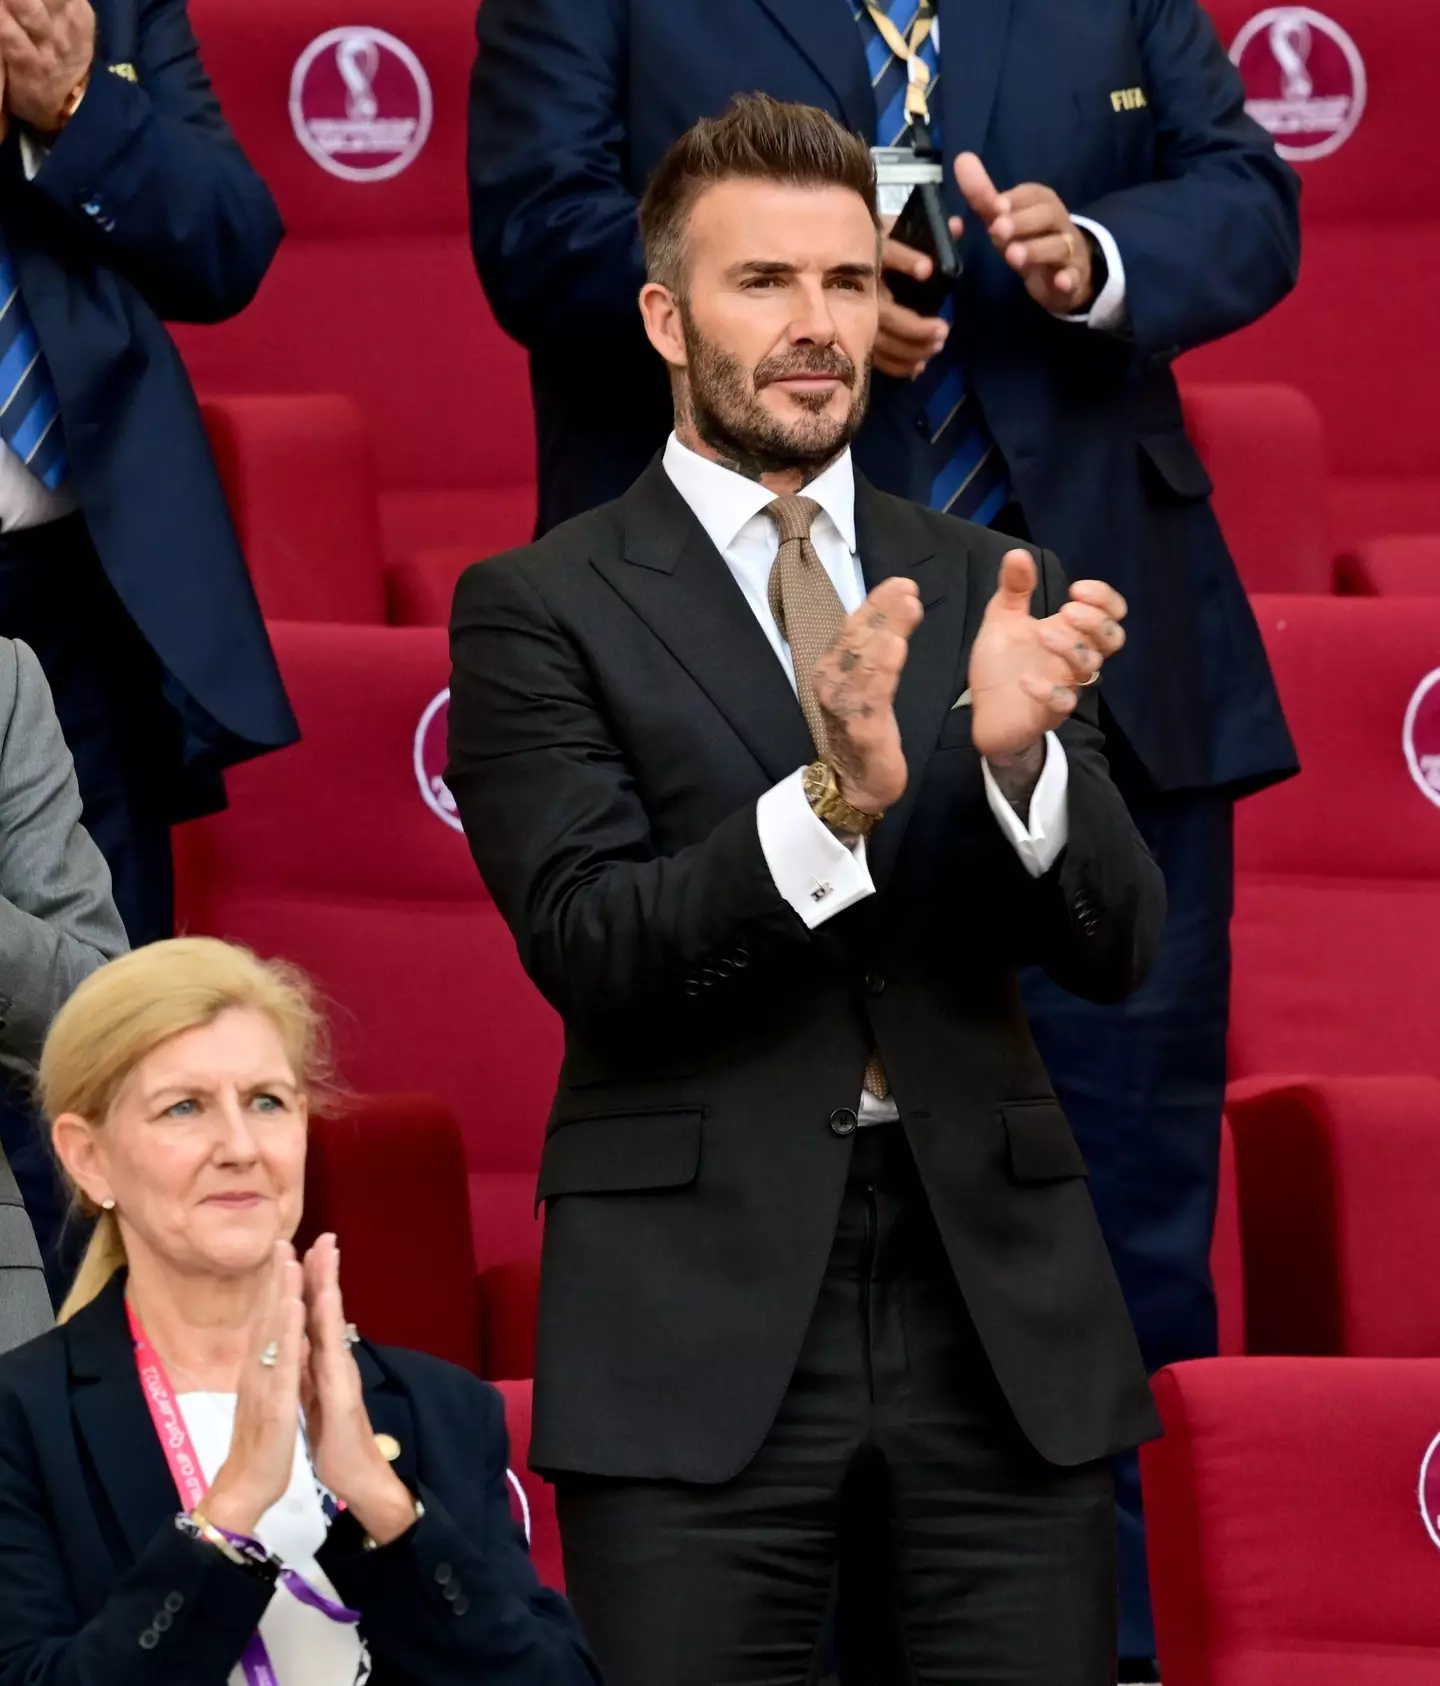 Beckham's representatives said his participation stimulated a 'positive' discussion.